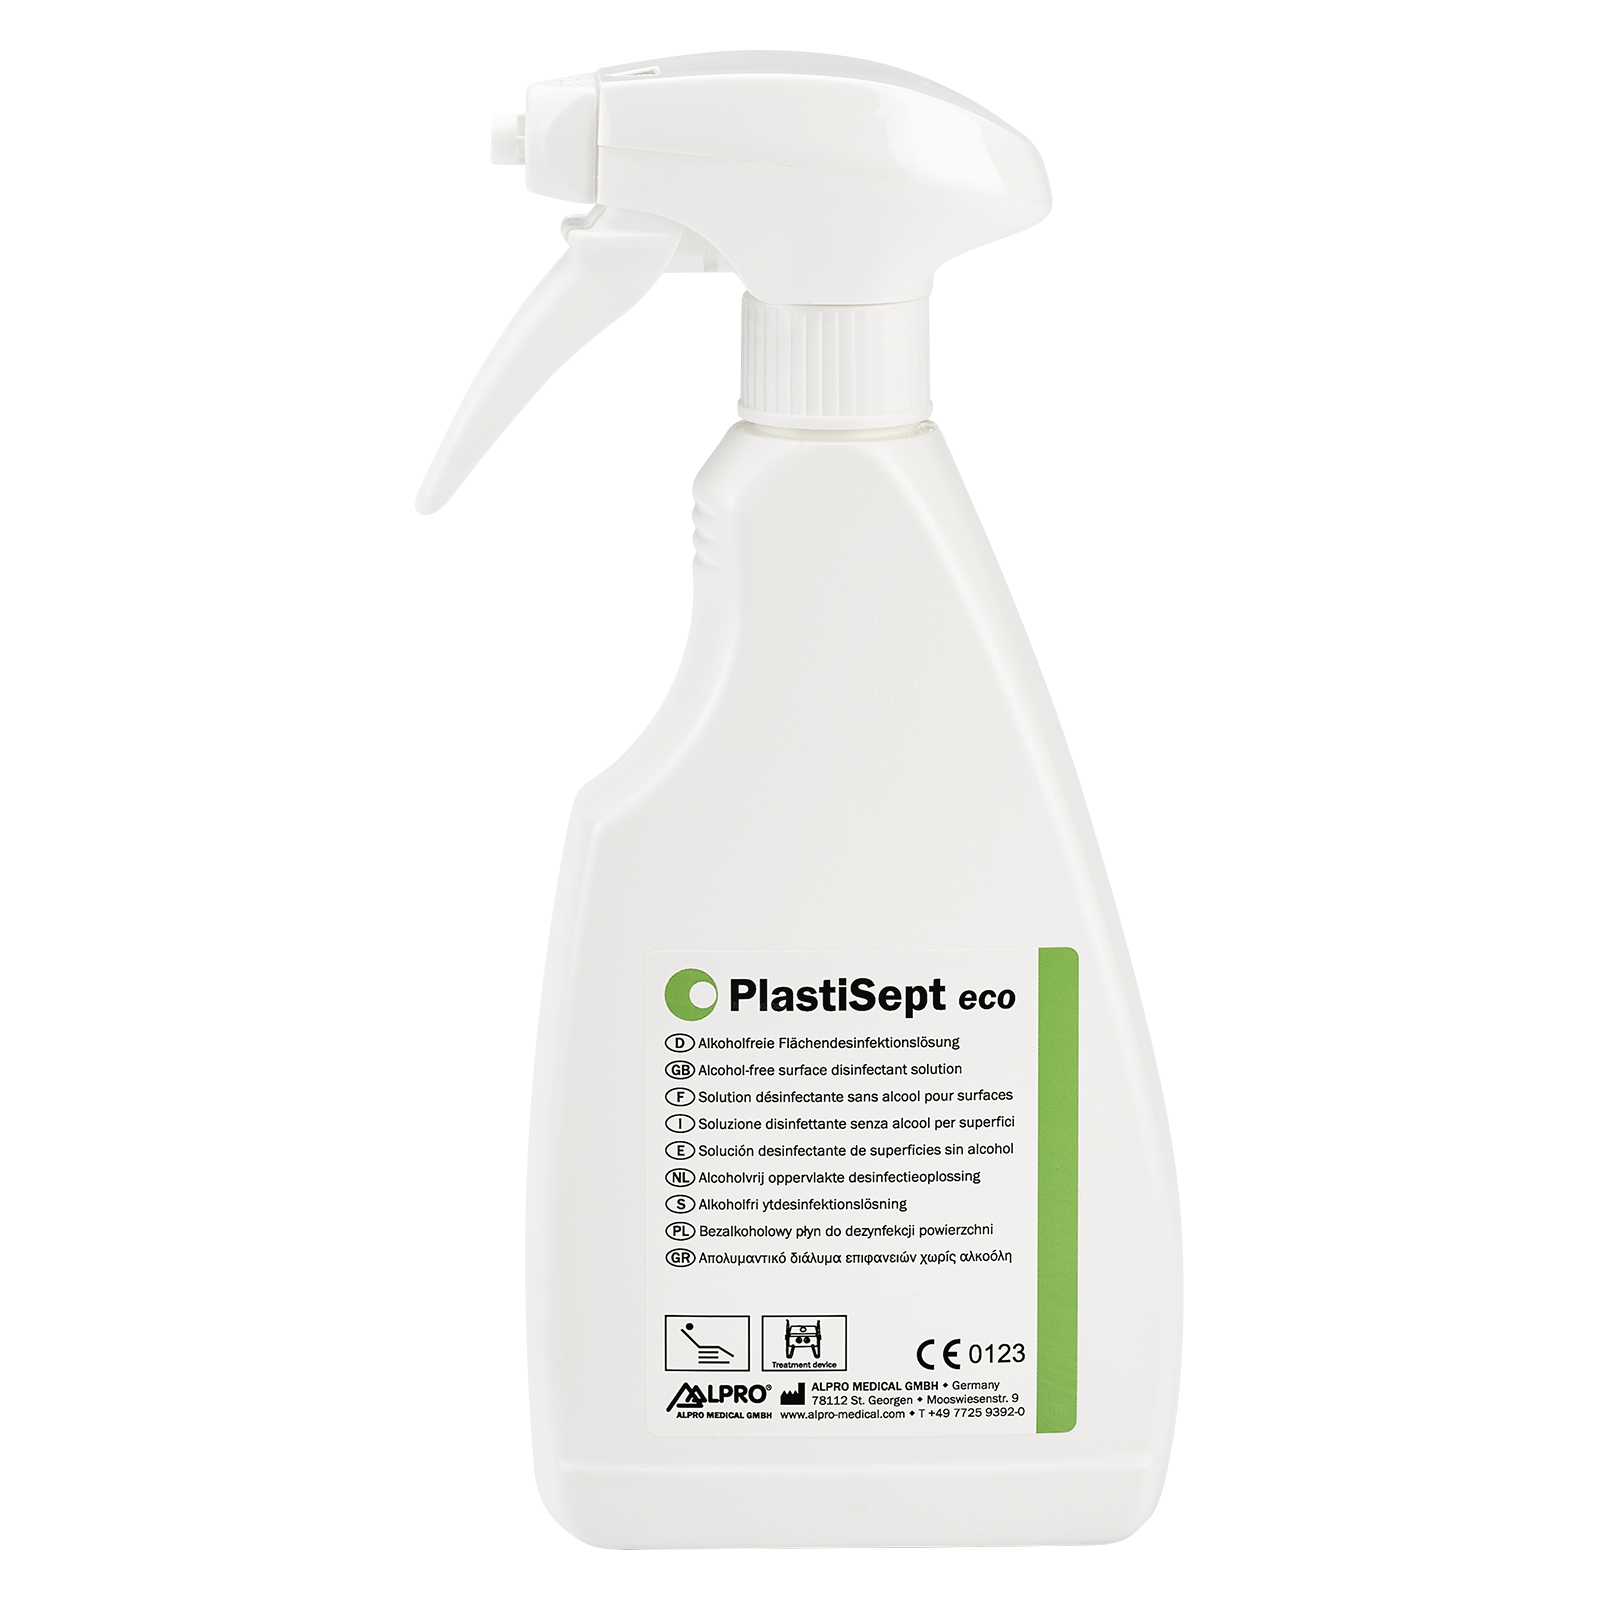 ALPRO PlastiSept eco - Oberflächendesinfektion | Schaumflasche 500 ml